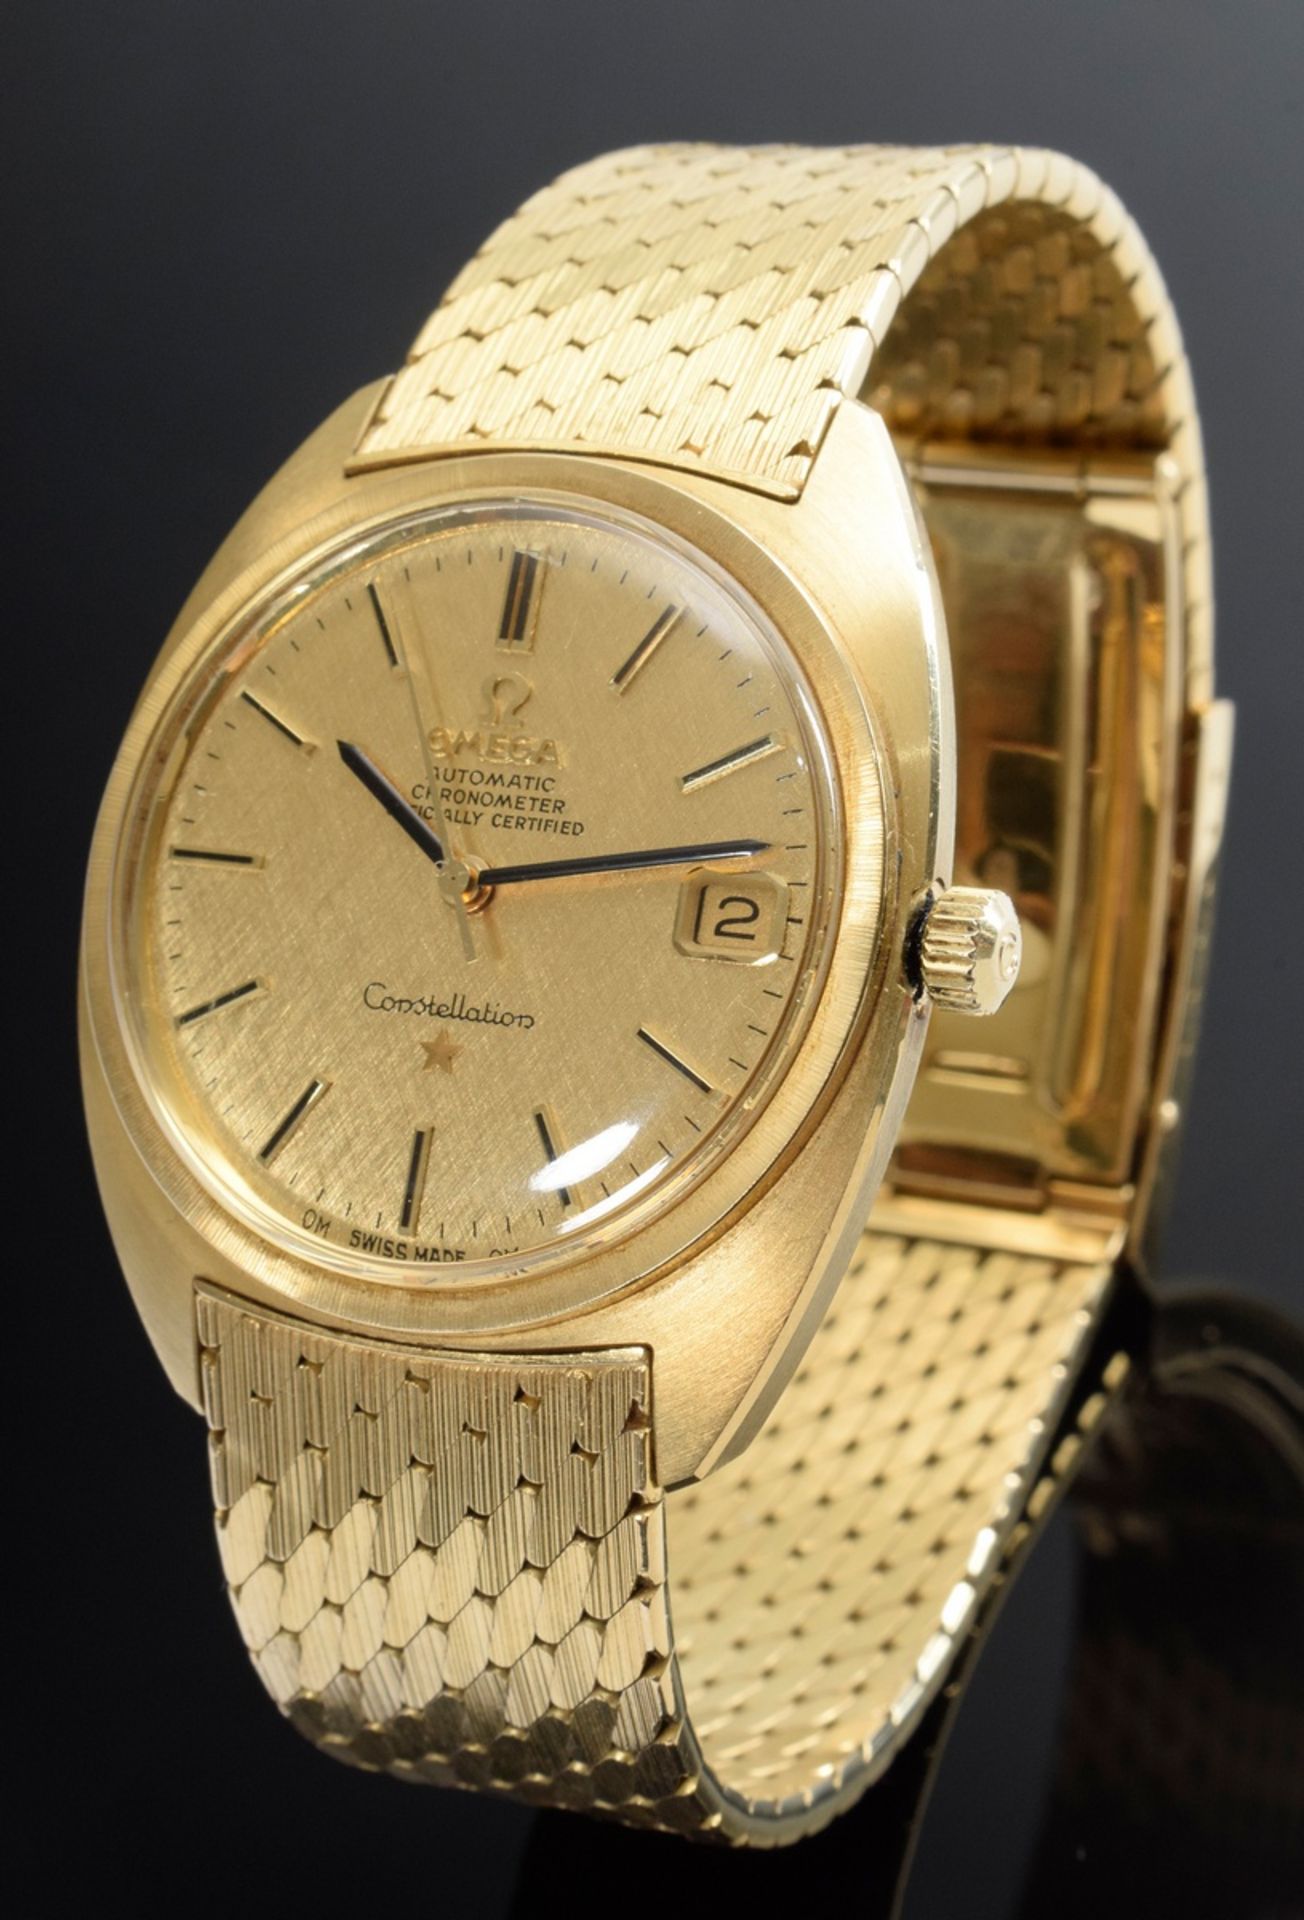 Omega GG 750 "Constellation" GG 750 men's wristwatch, chronometer, automatic, mineral glass, bracel